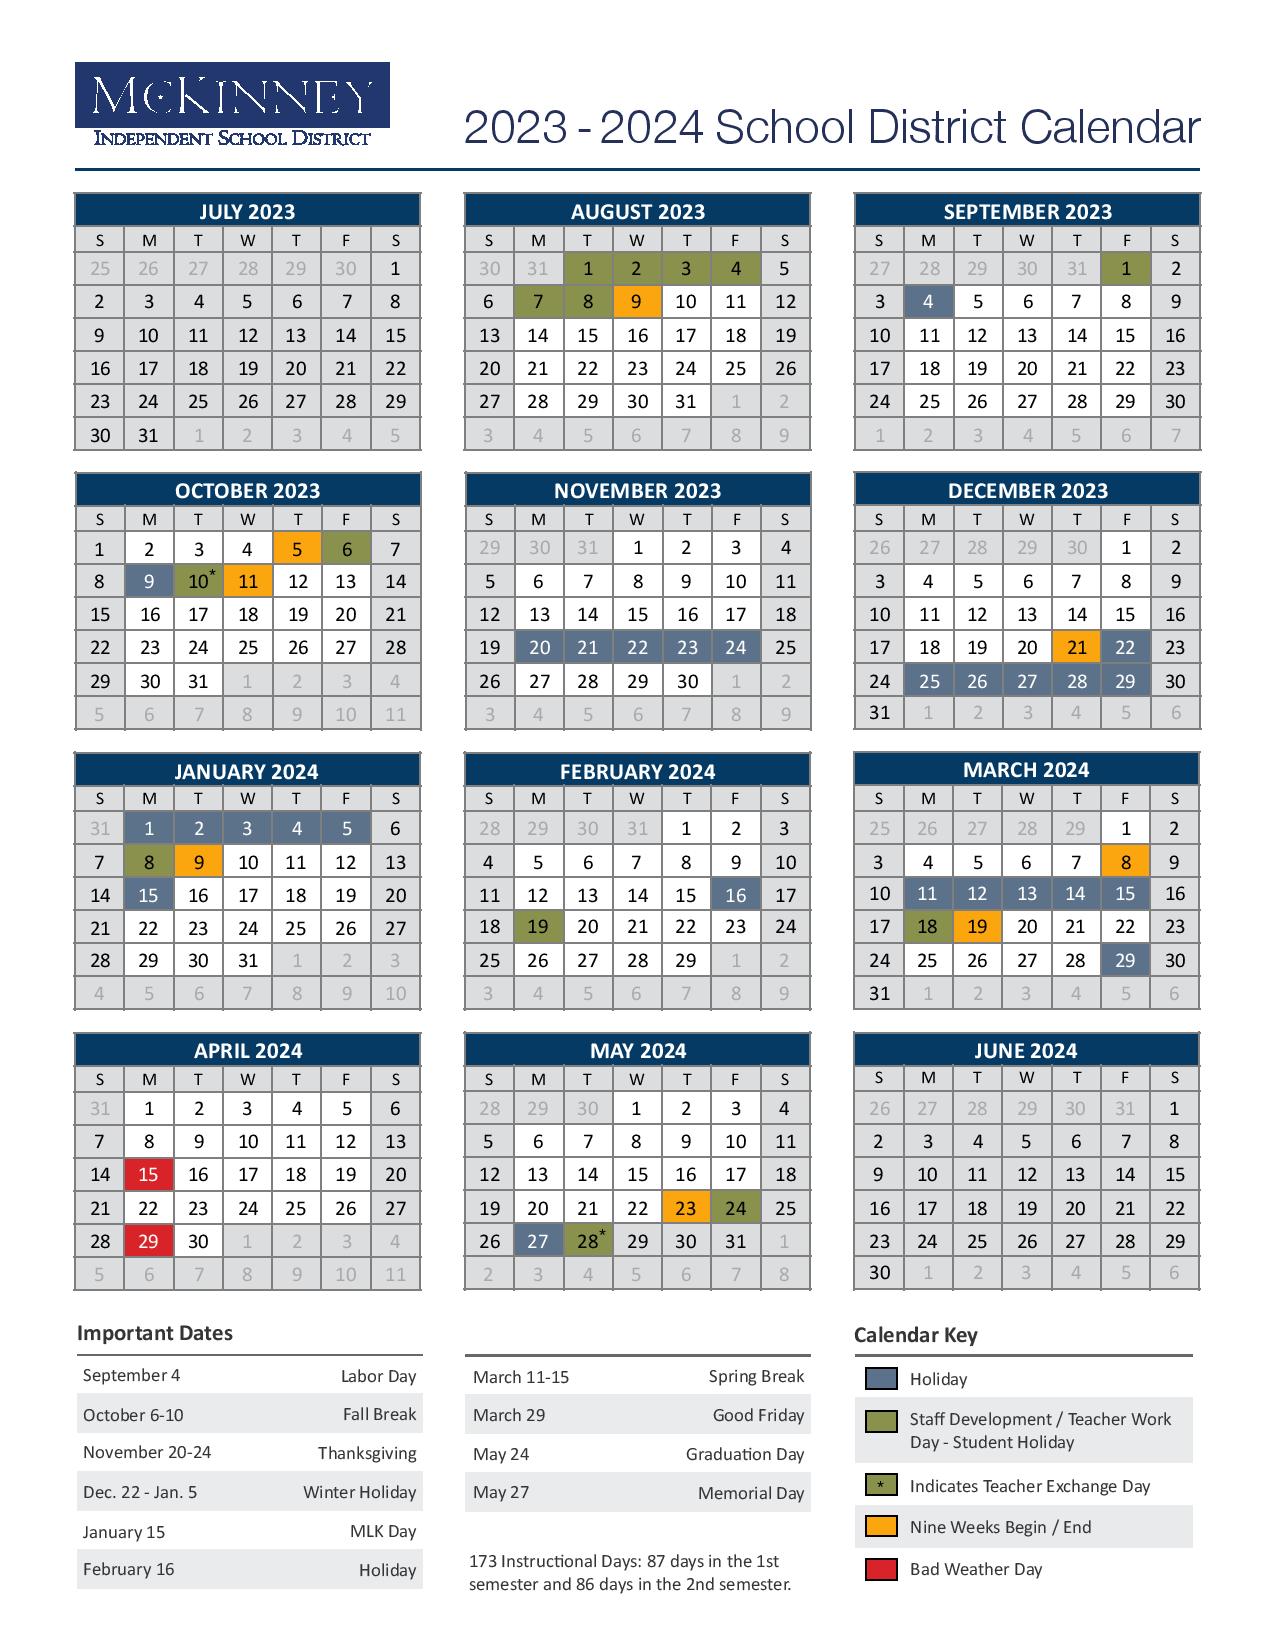 McKinney Independent School District Calendar Page 001 